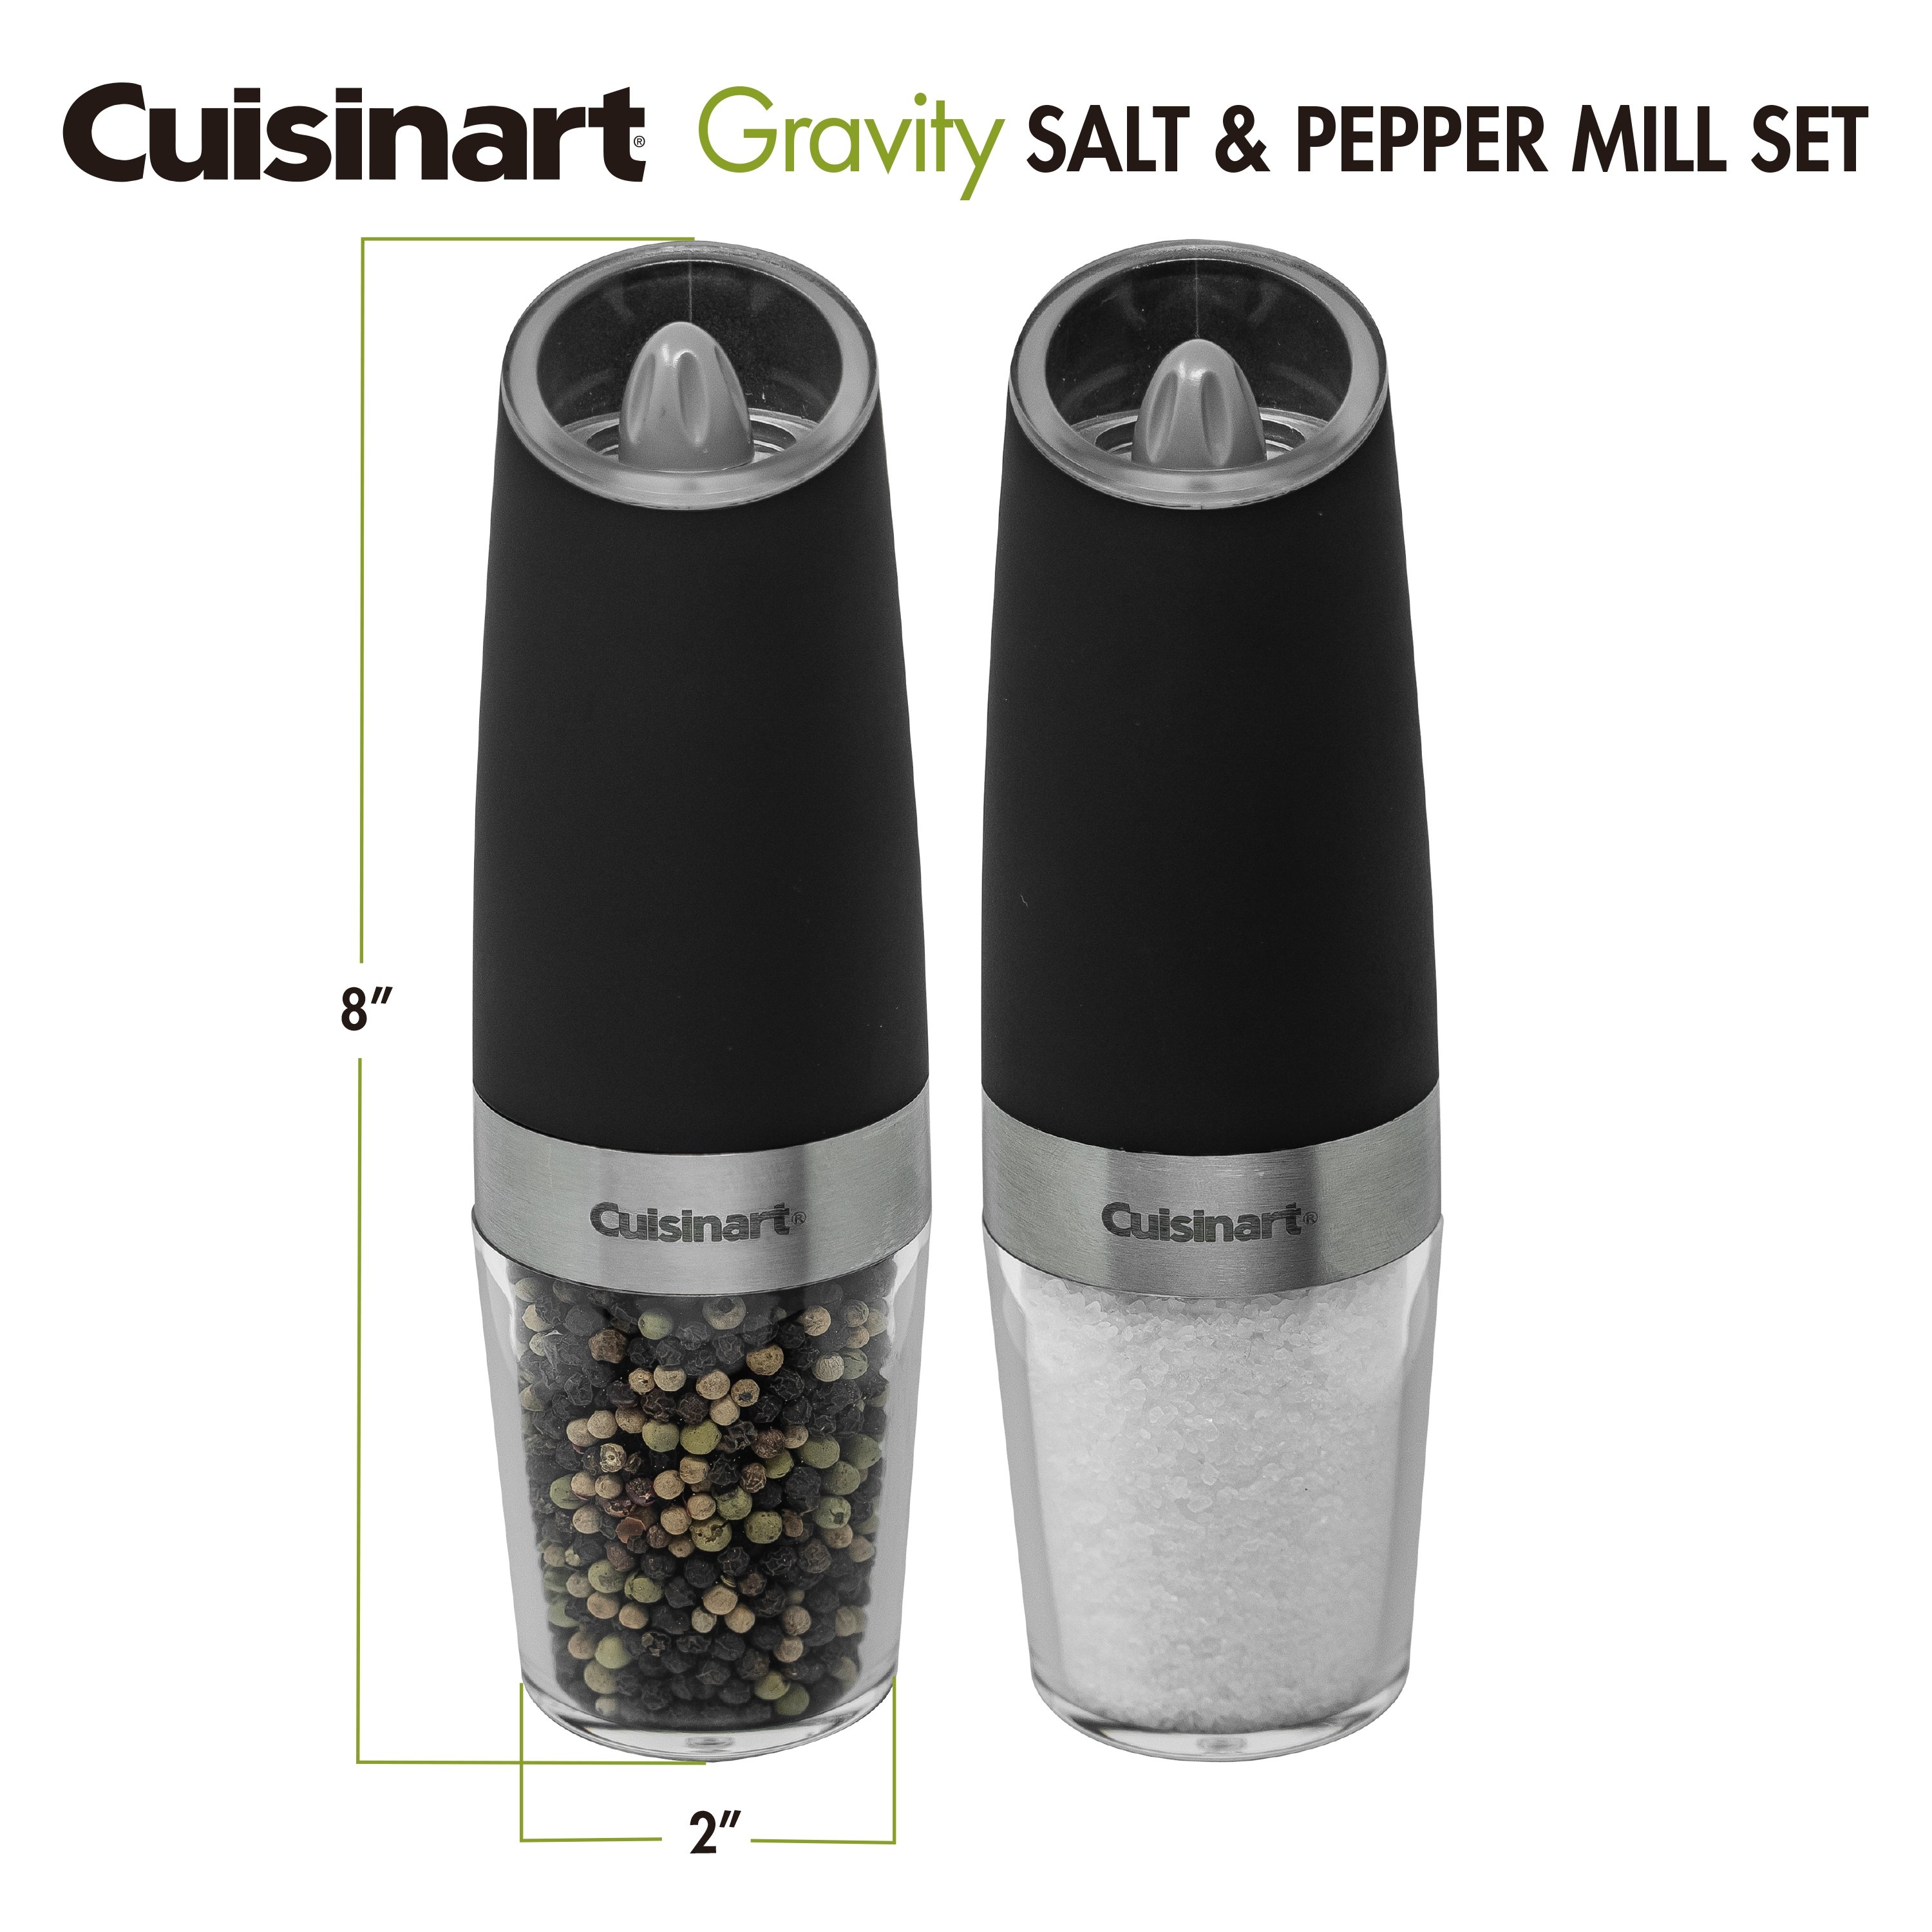 Cuisinart Gravity Salt and Pepper Mill